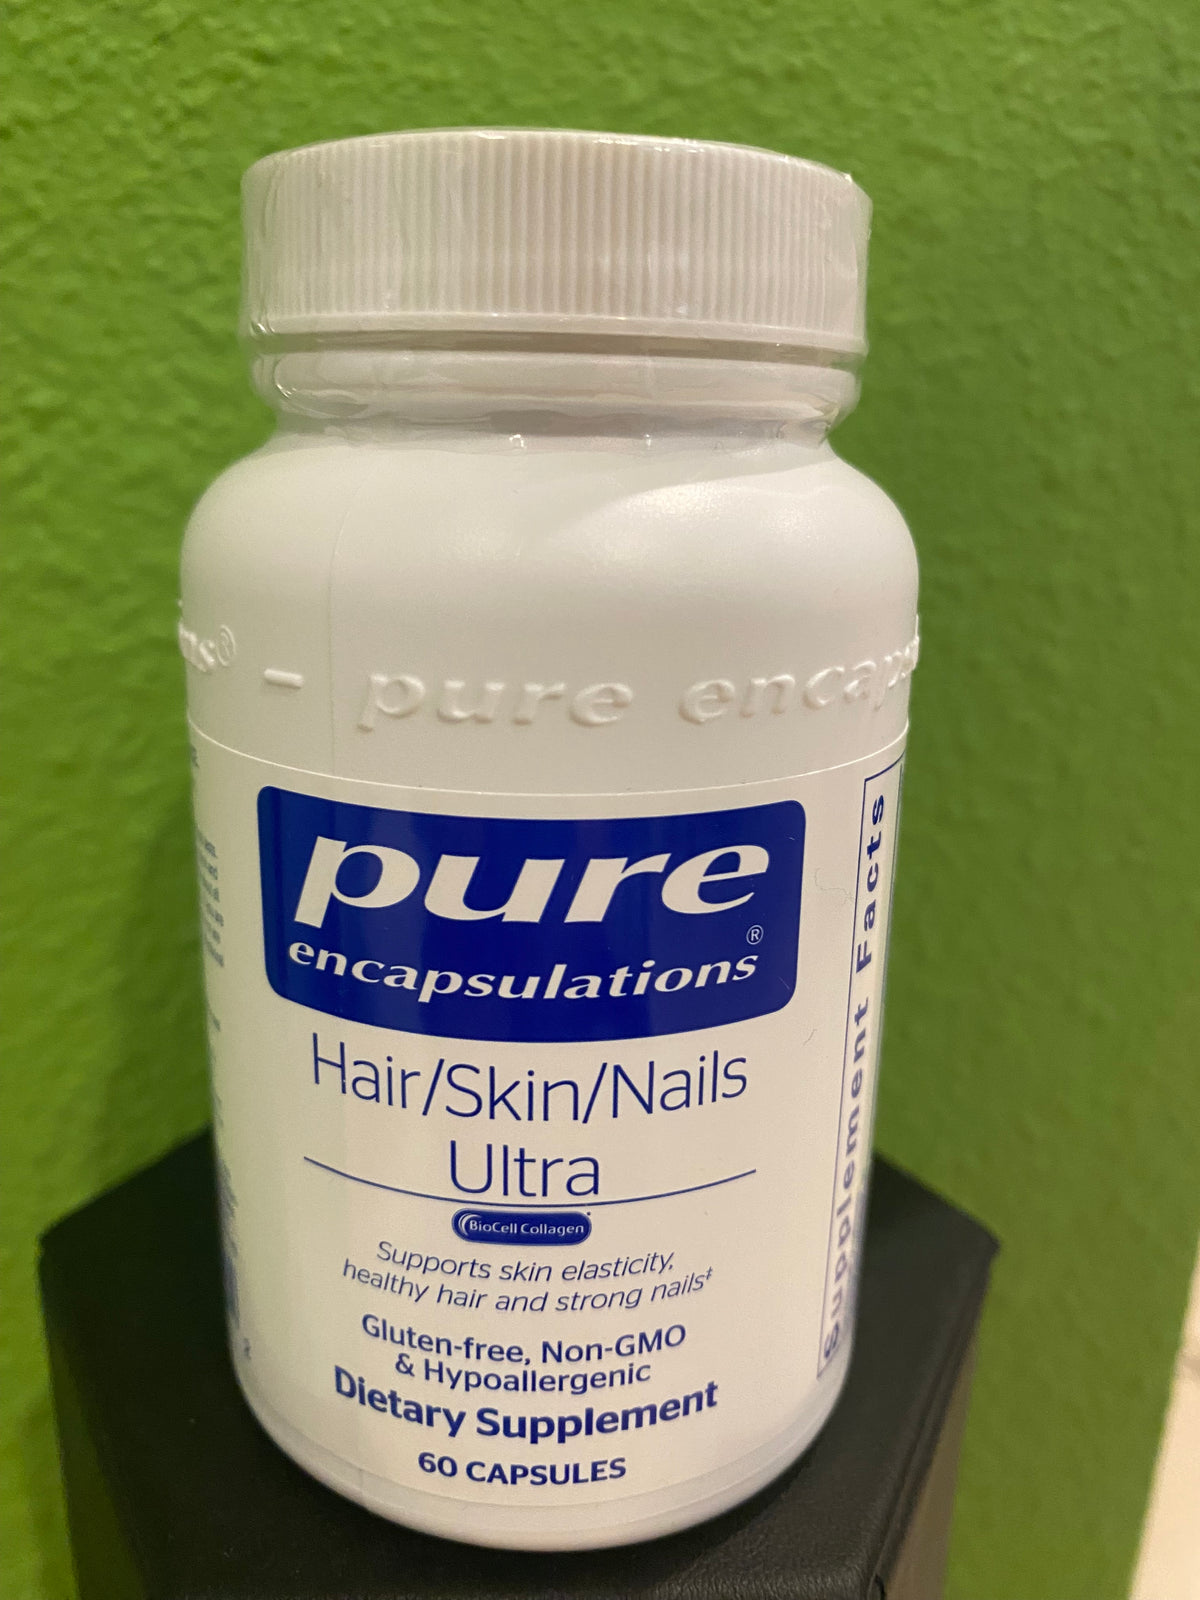 Hair/Skin/Nails Ultra - 60 Capsules